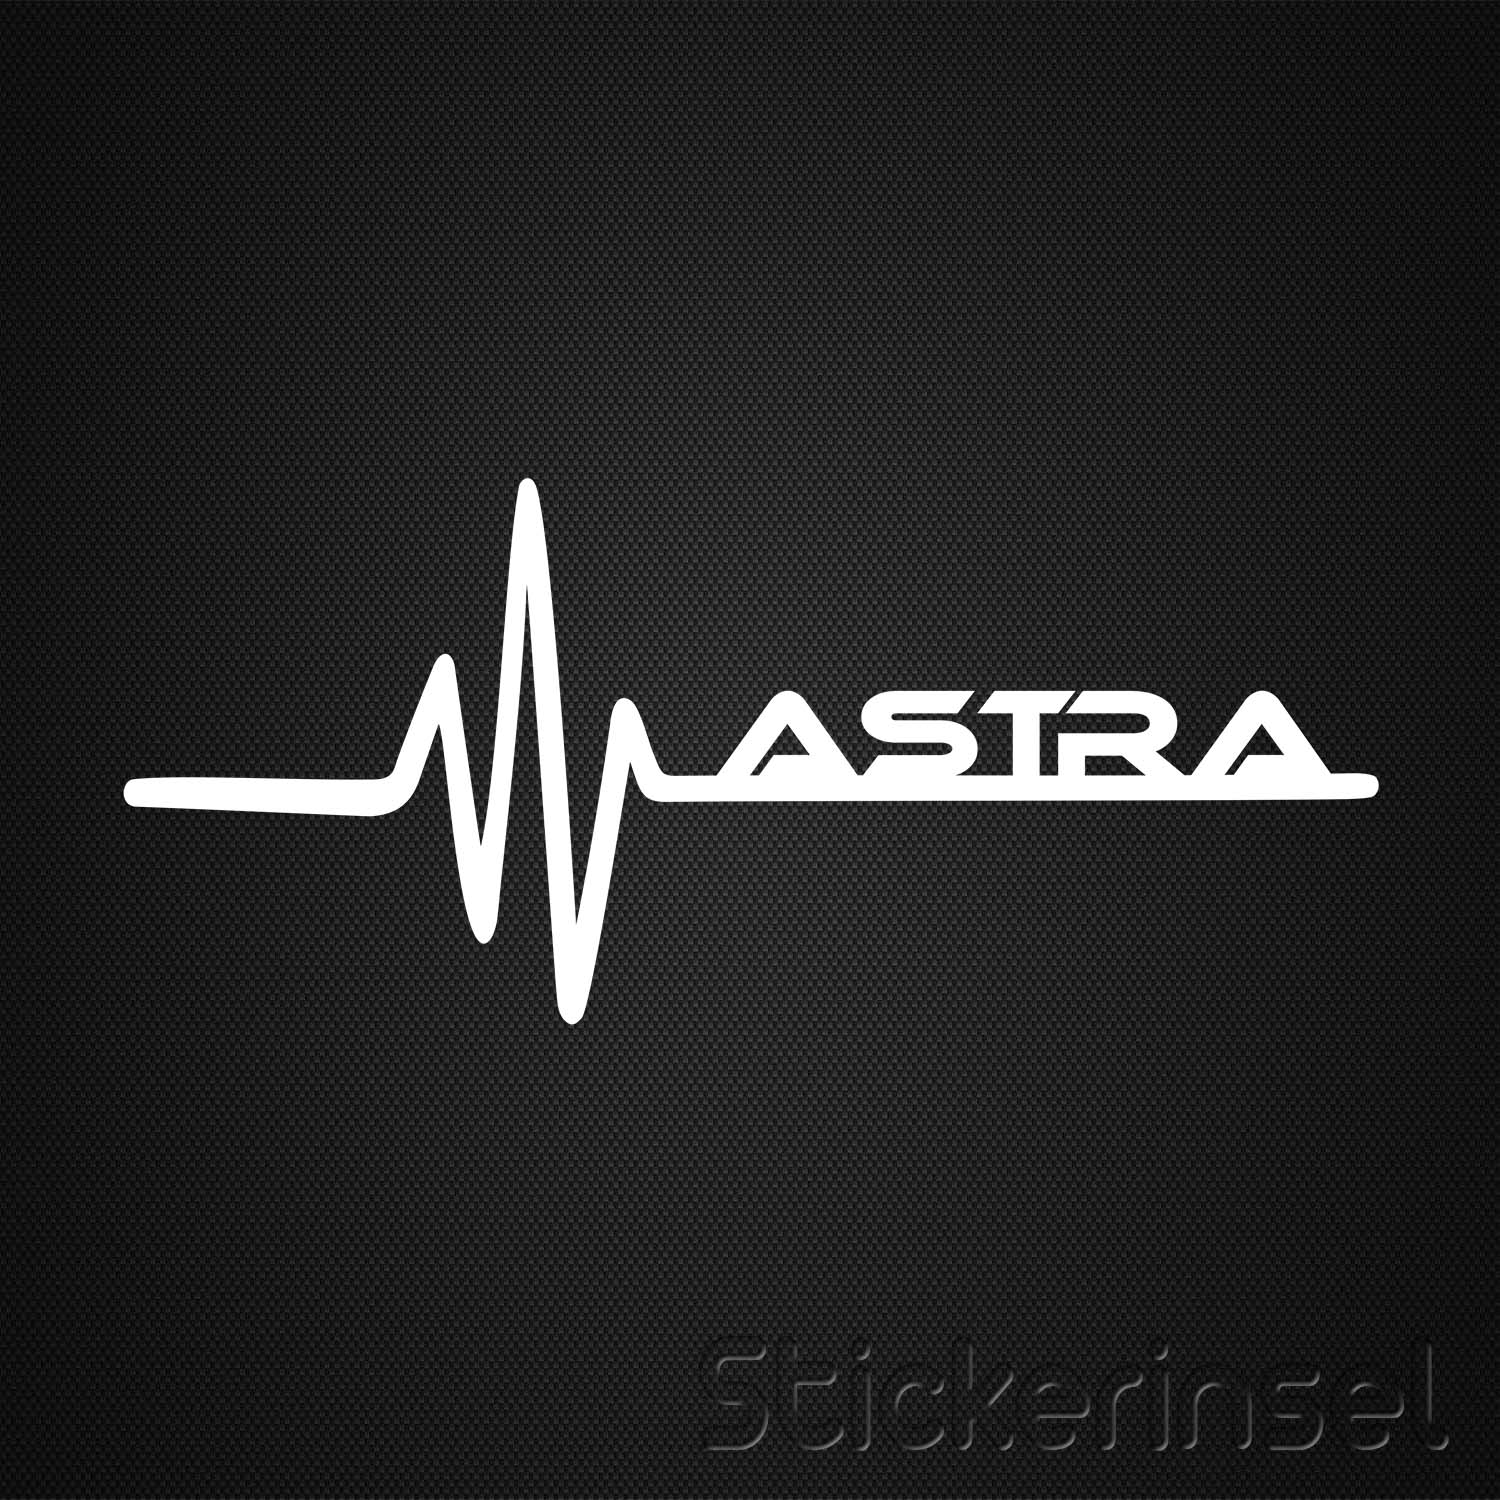 https://www.stickerinsel.at/wp-content/uploads/2016/04/Stickerinsel_Autoaufkleber_Heartbeat-Astra.jpg